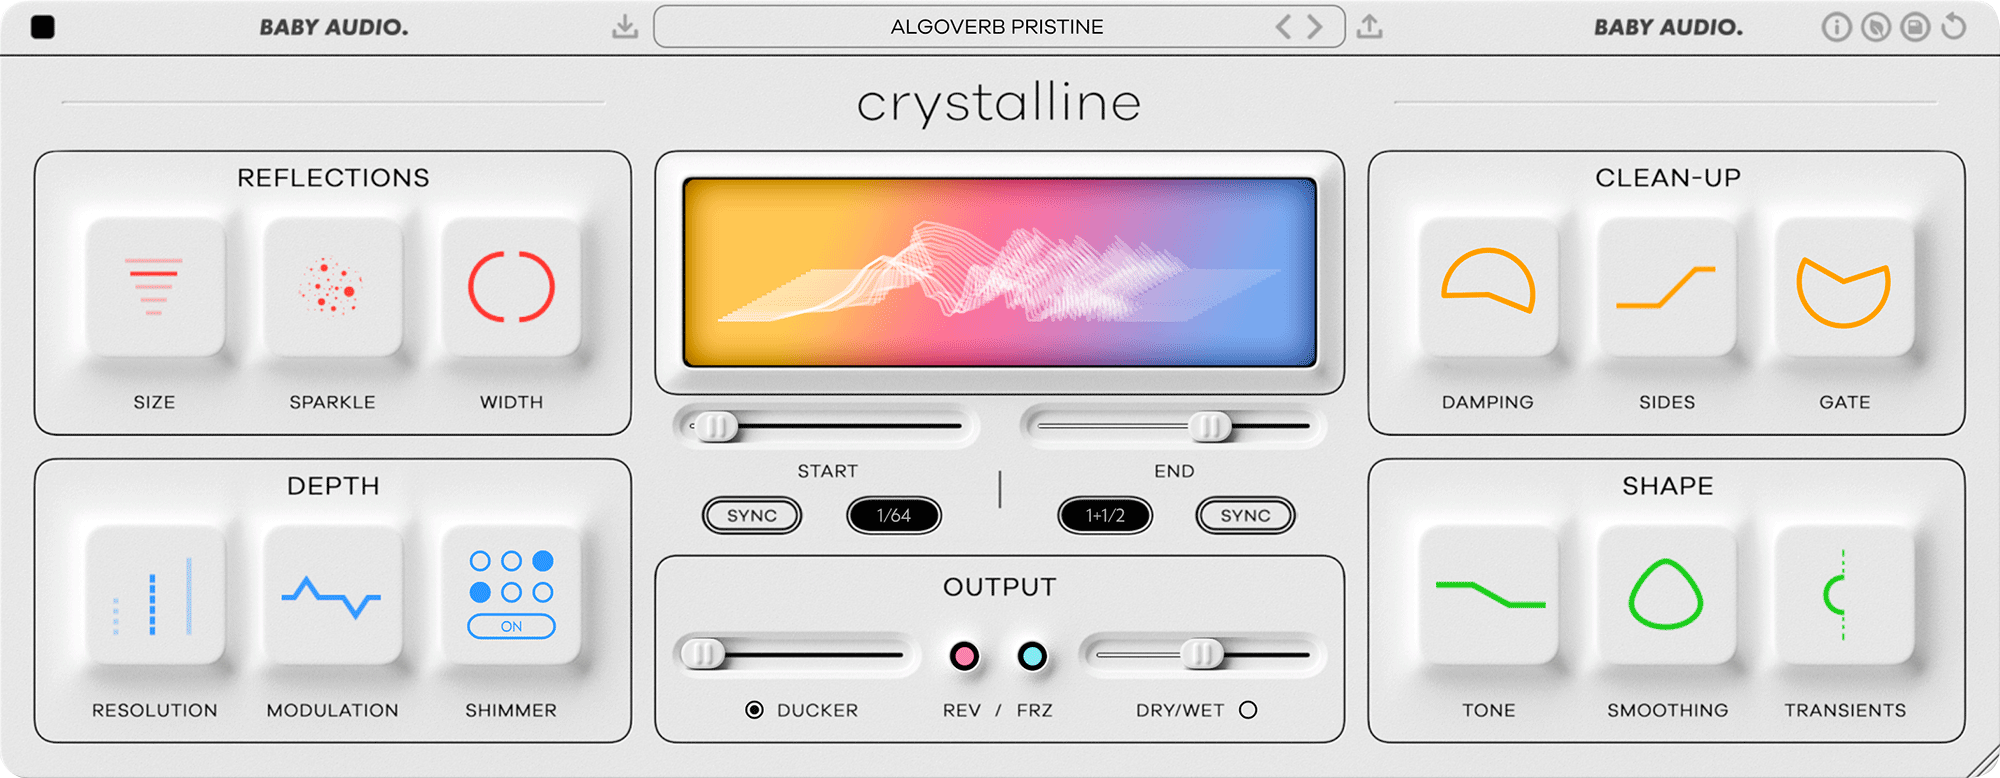 Baby Audio Crystalline Reverb Plugin